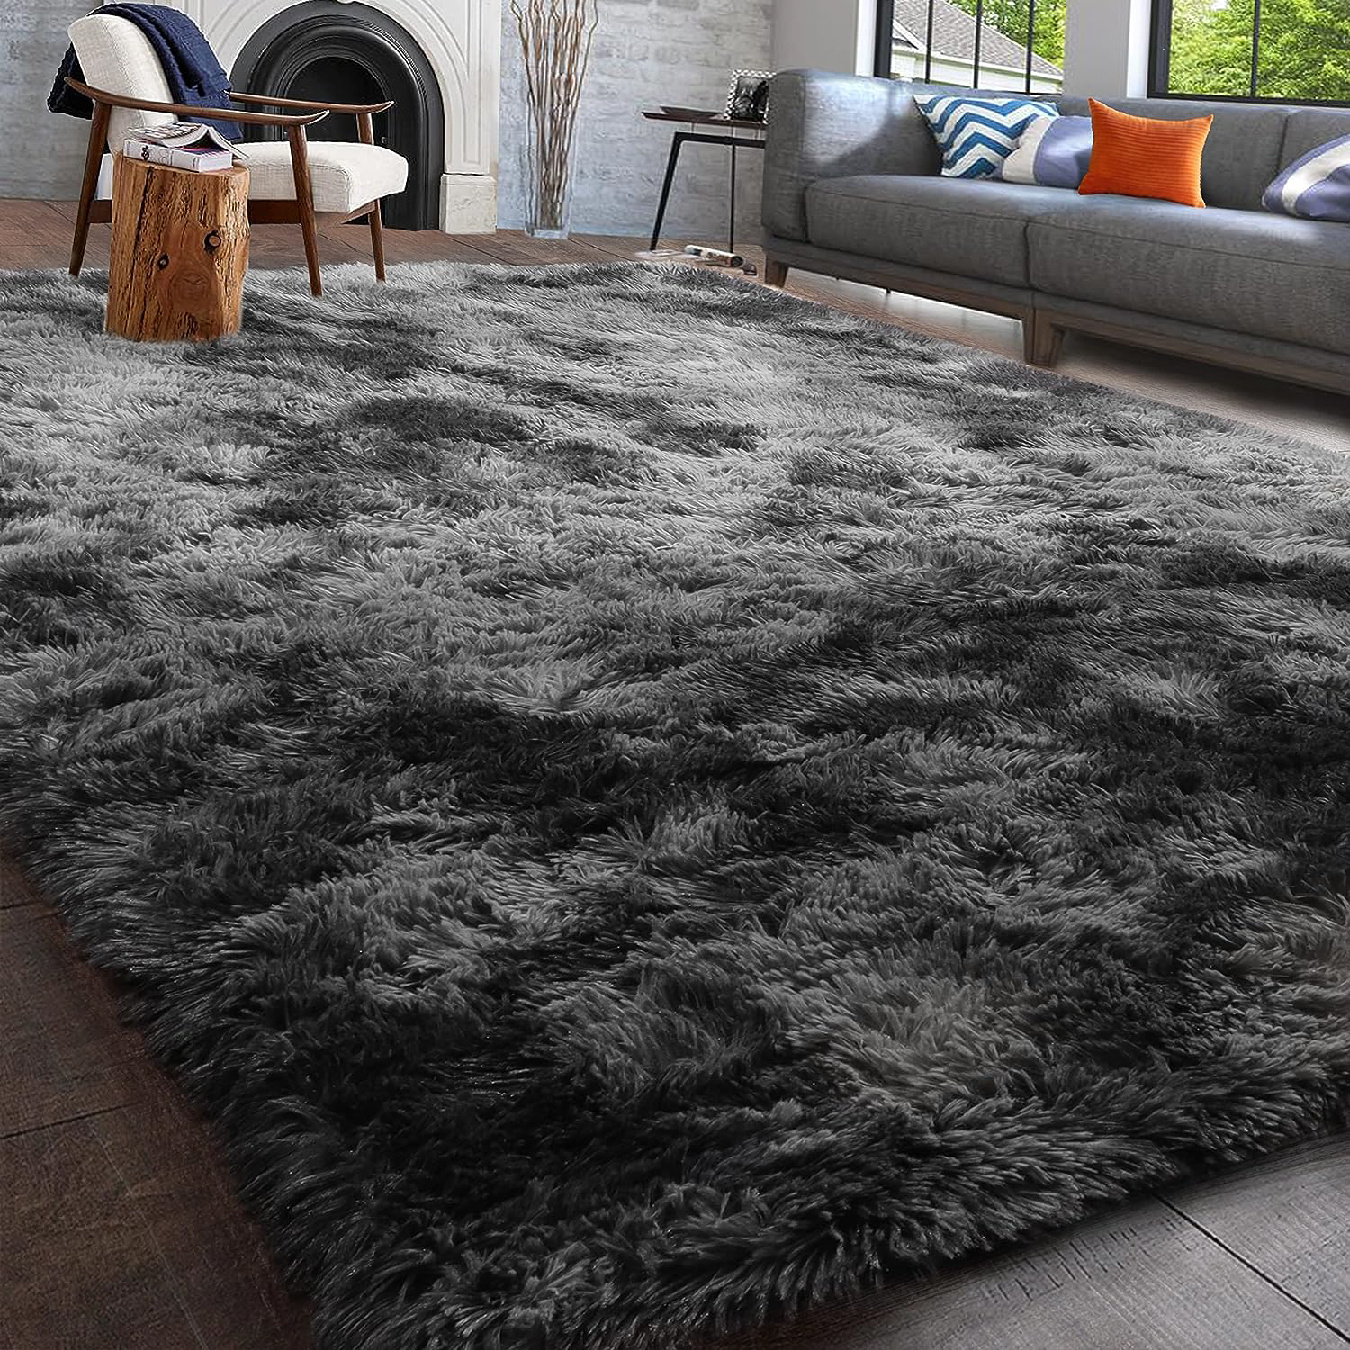 Large Shaggy Fluffy Rugs Anti-Slip Super Soft Mat Living Room Bedroom  Carpet Rug